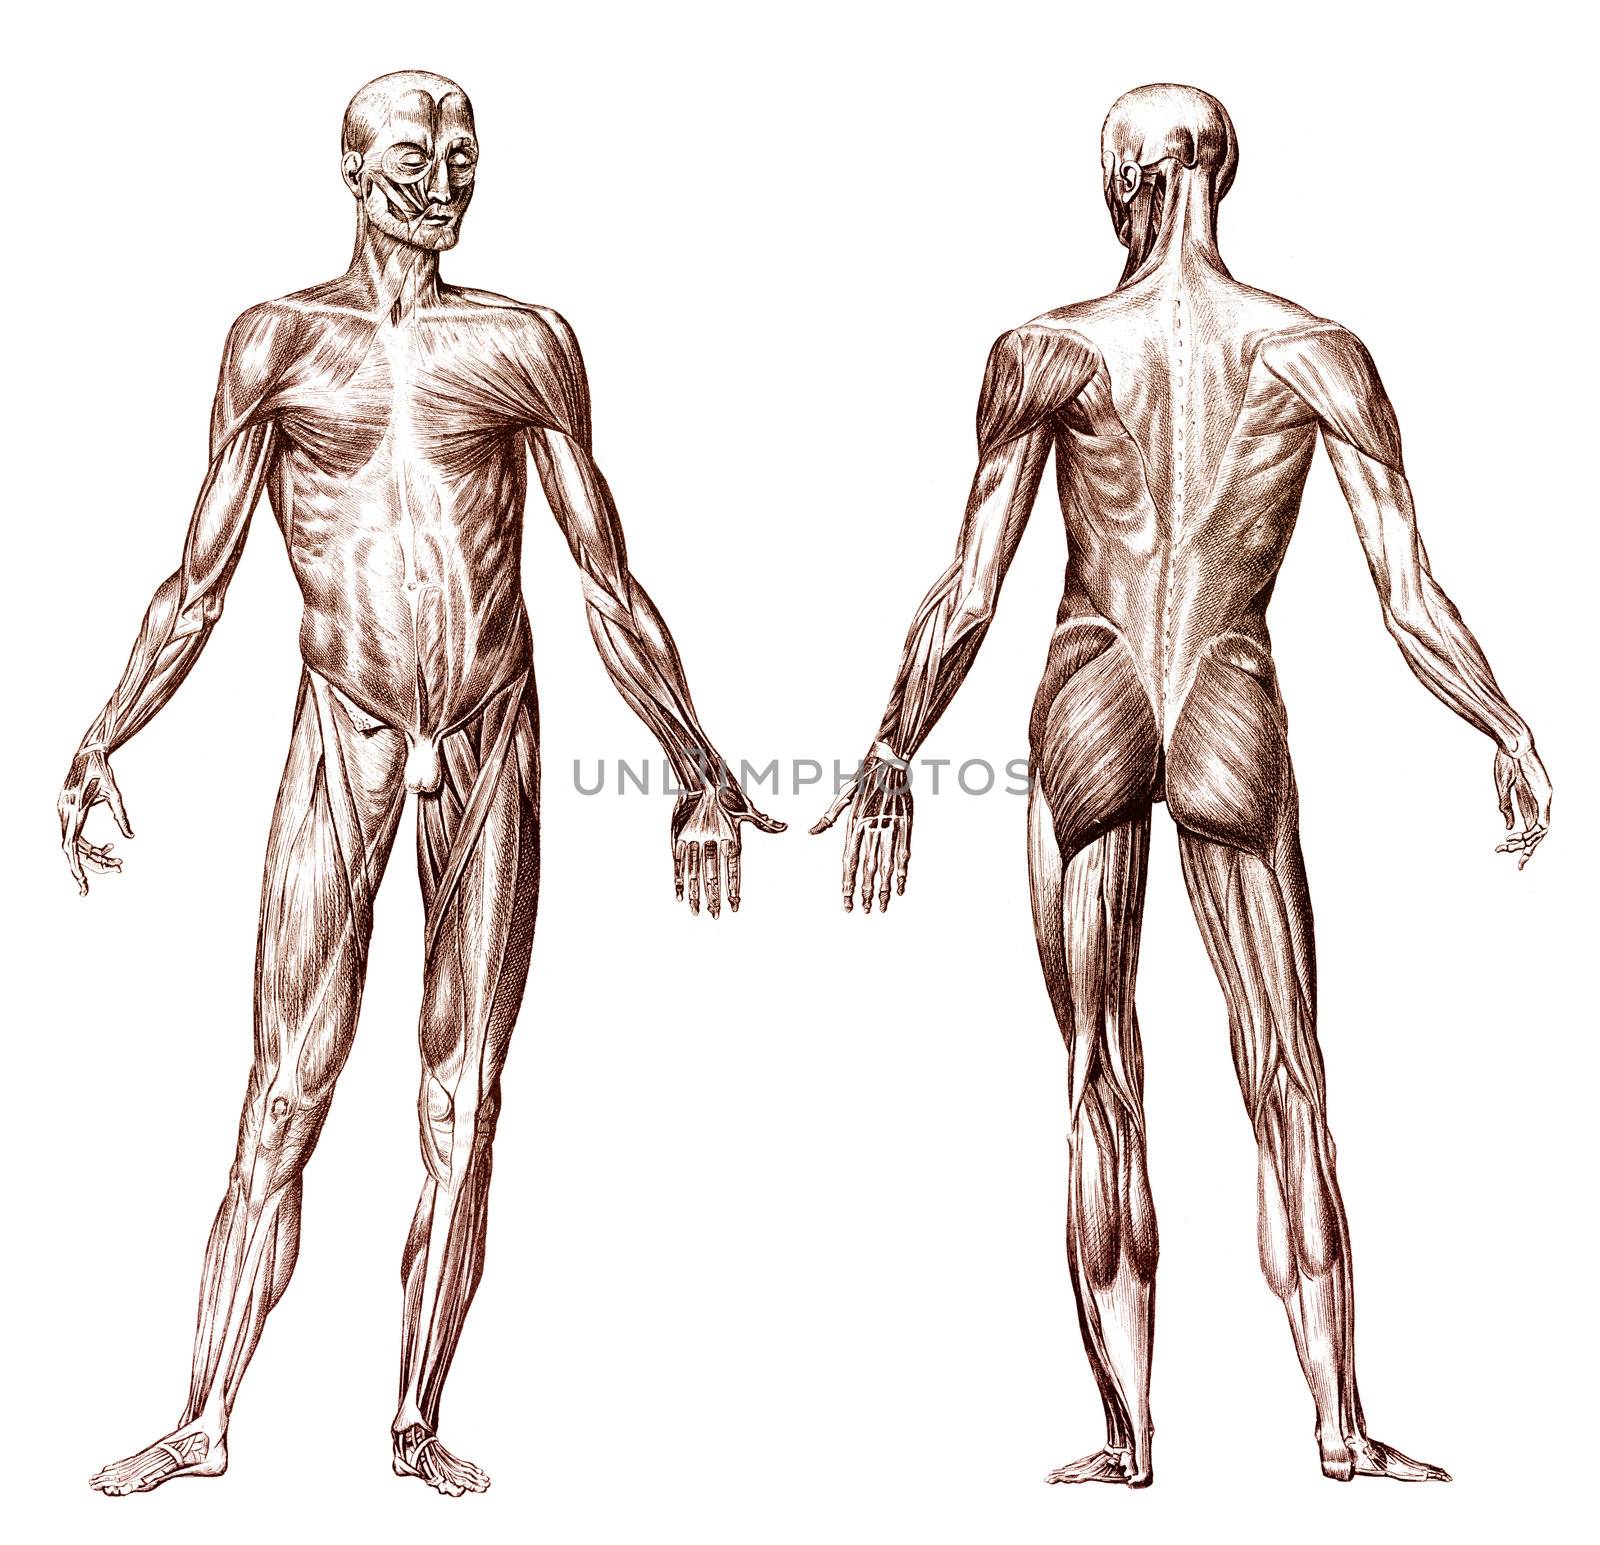 Human muscular system by anterovium